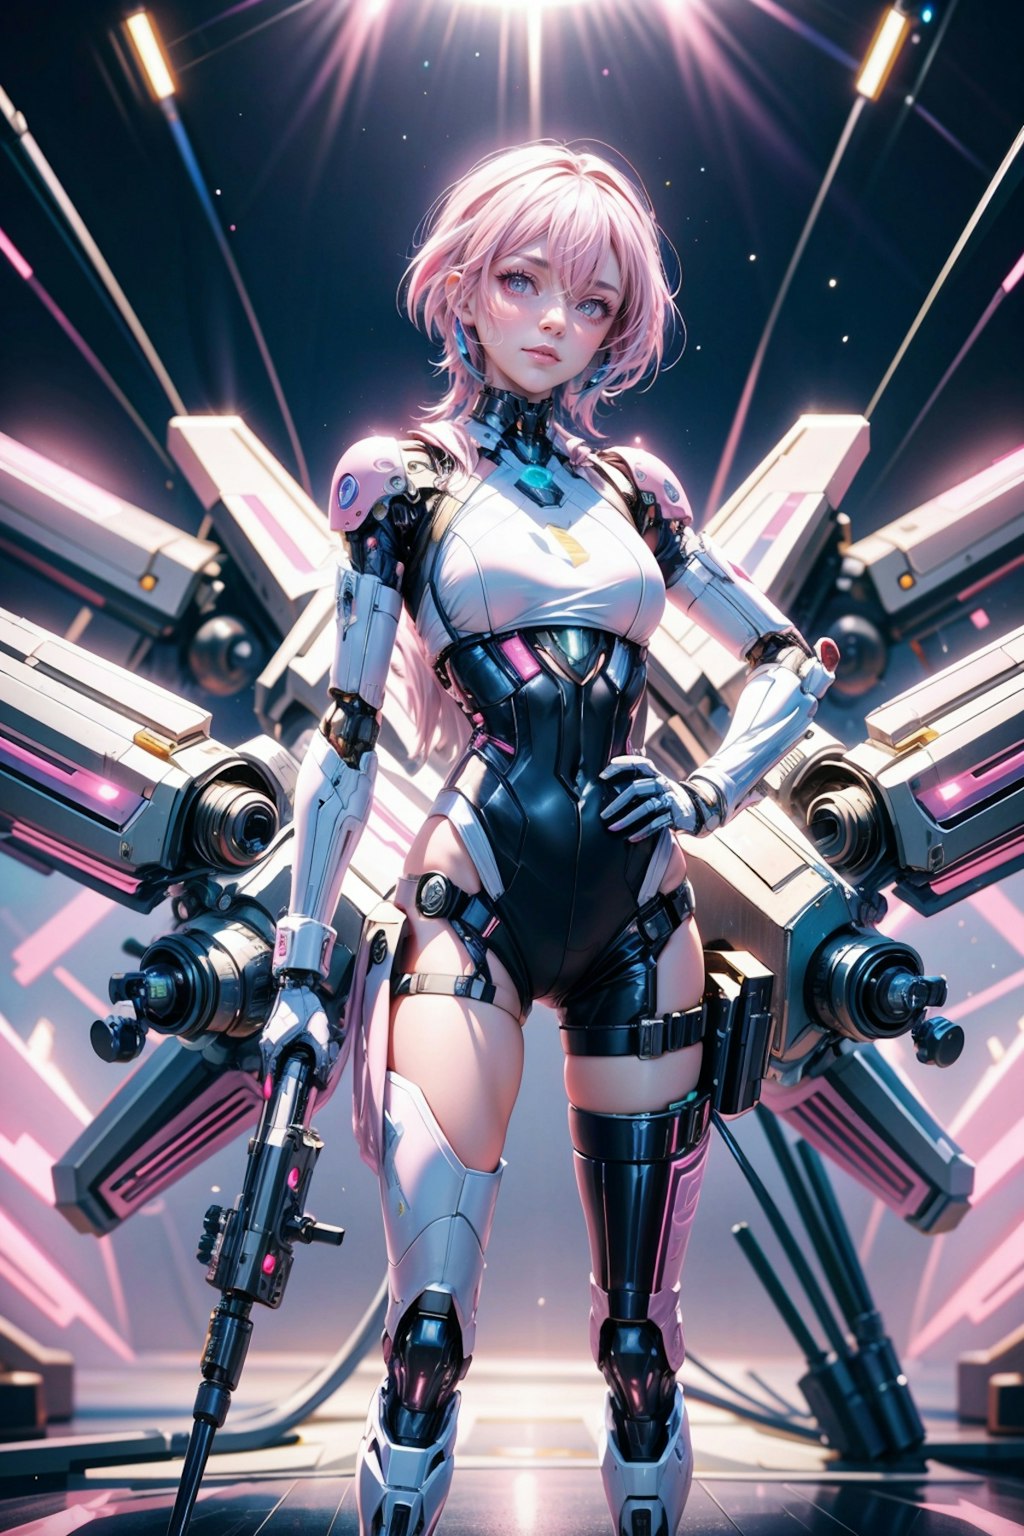 AIアンドロイドの彼女～Cyberpunk Gunfighter Style